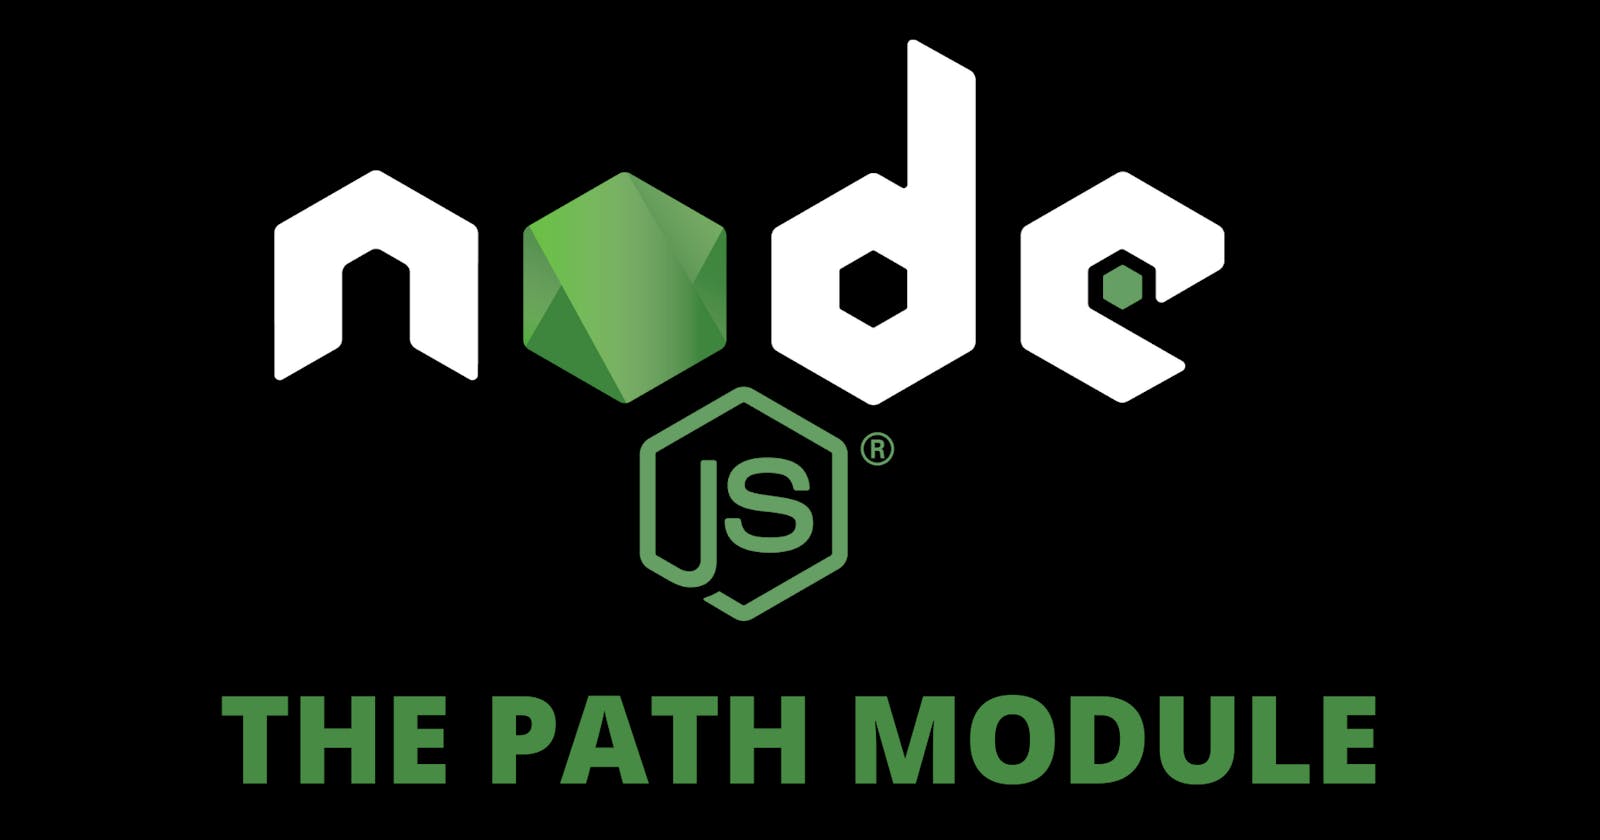 Node js modules simplified: The Path module.